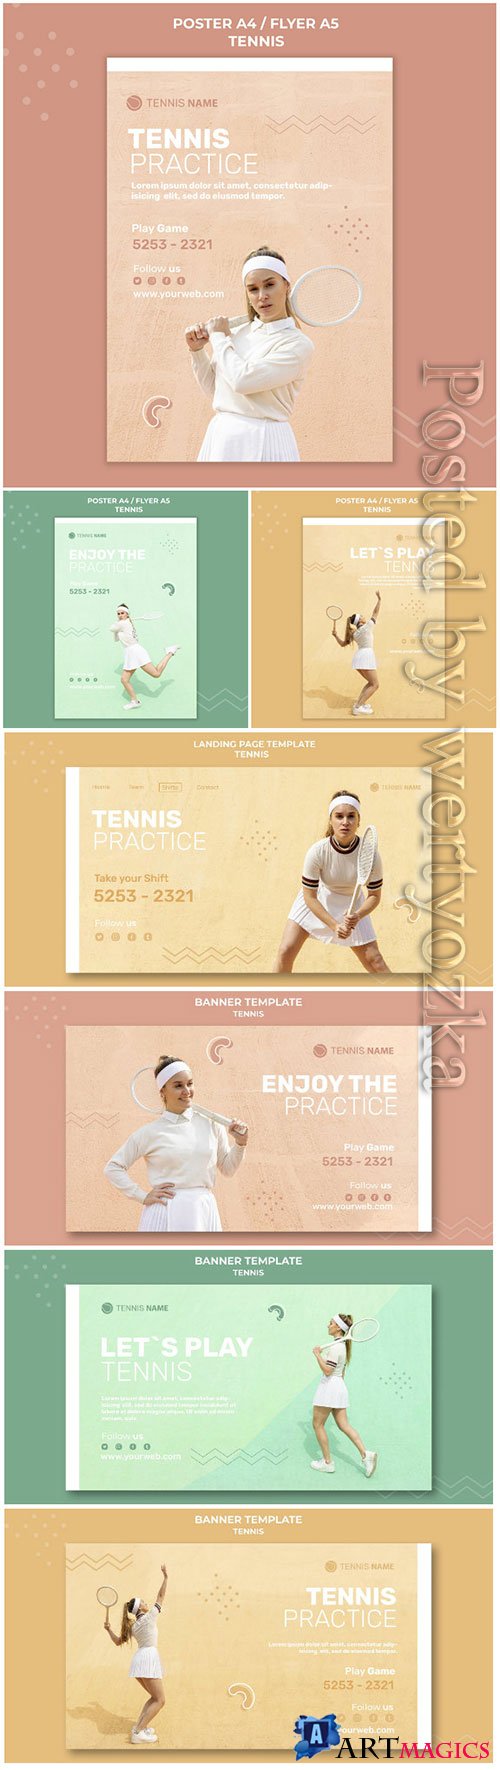 Tennis practice poster template design psd